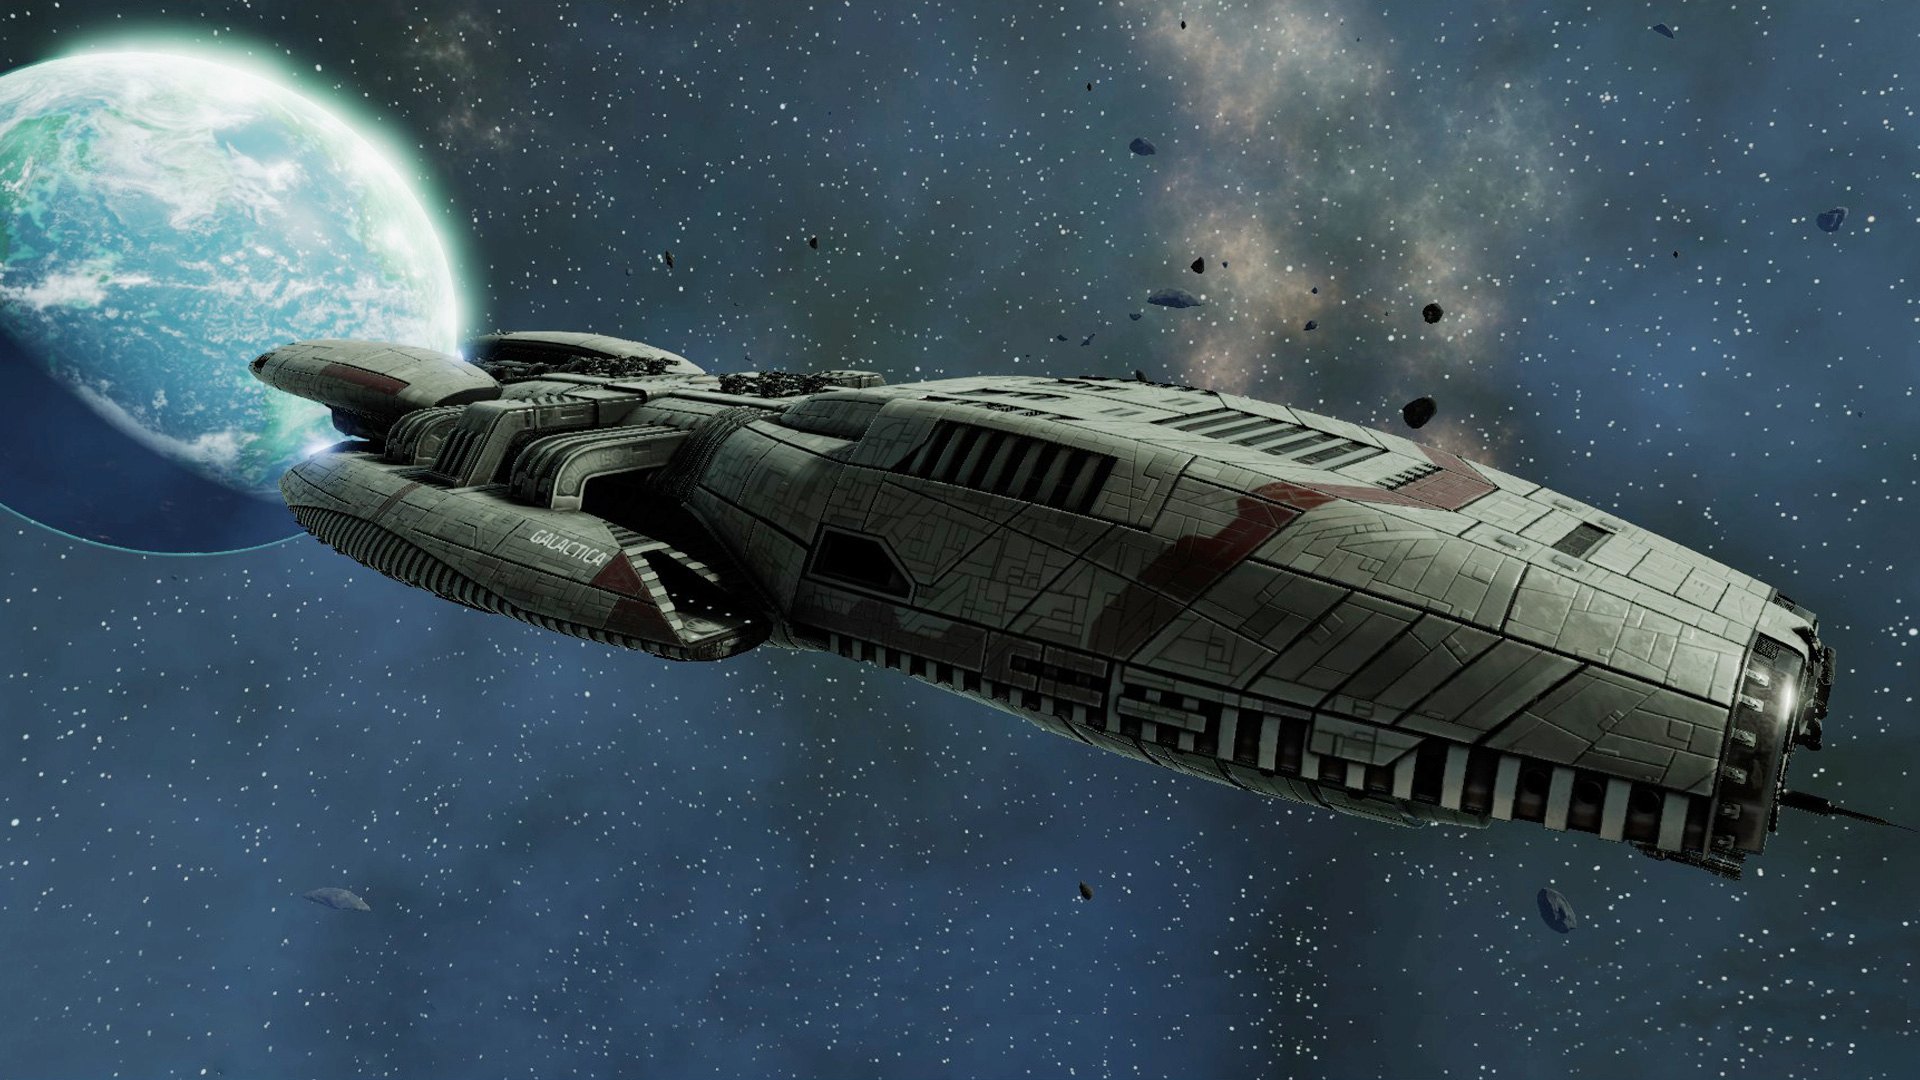 Battlestar Galactica Deadlock - Sin and Sacrifice DLC Steam CD Key 4.95 usd